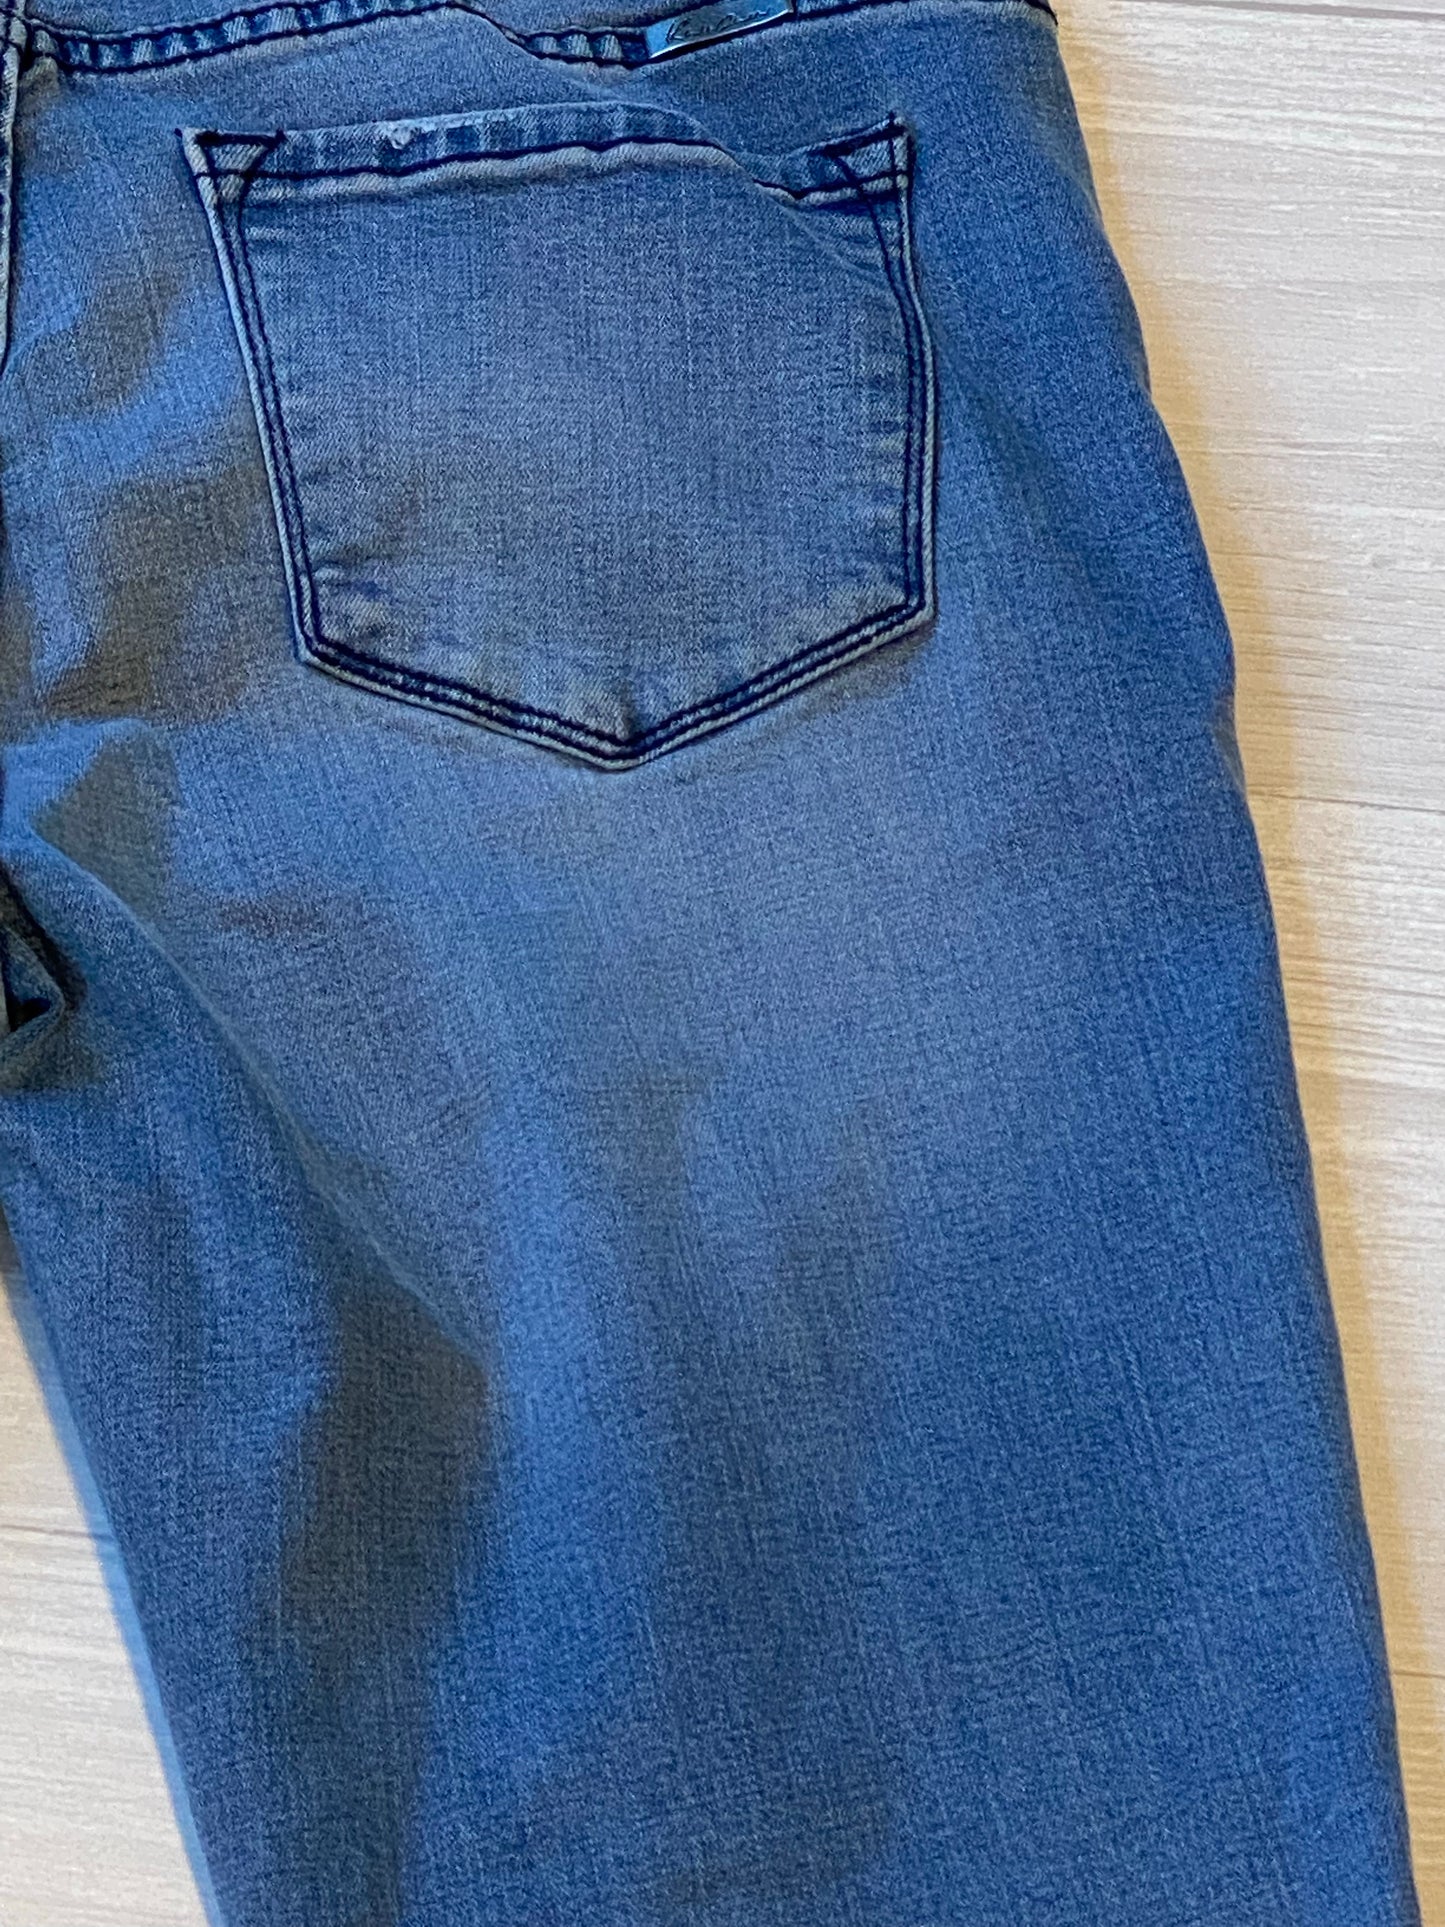 KanKan Medium Wash Jeans - 9/28